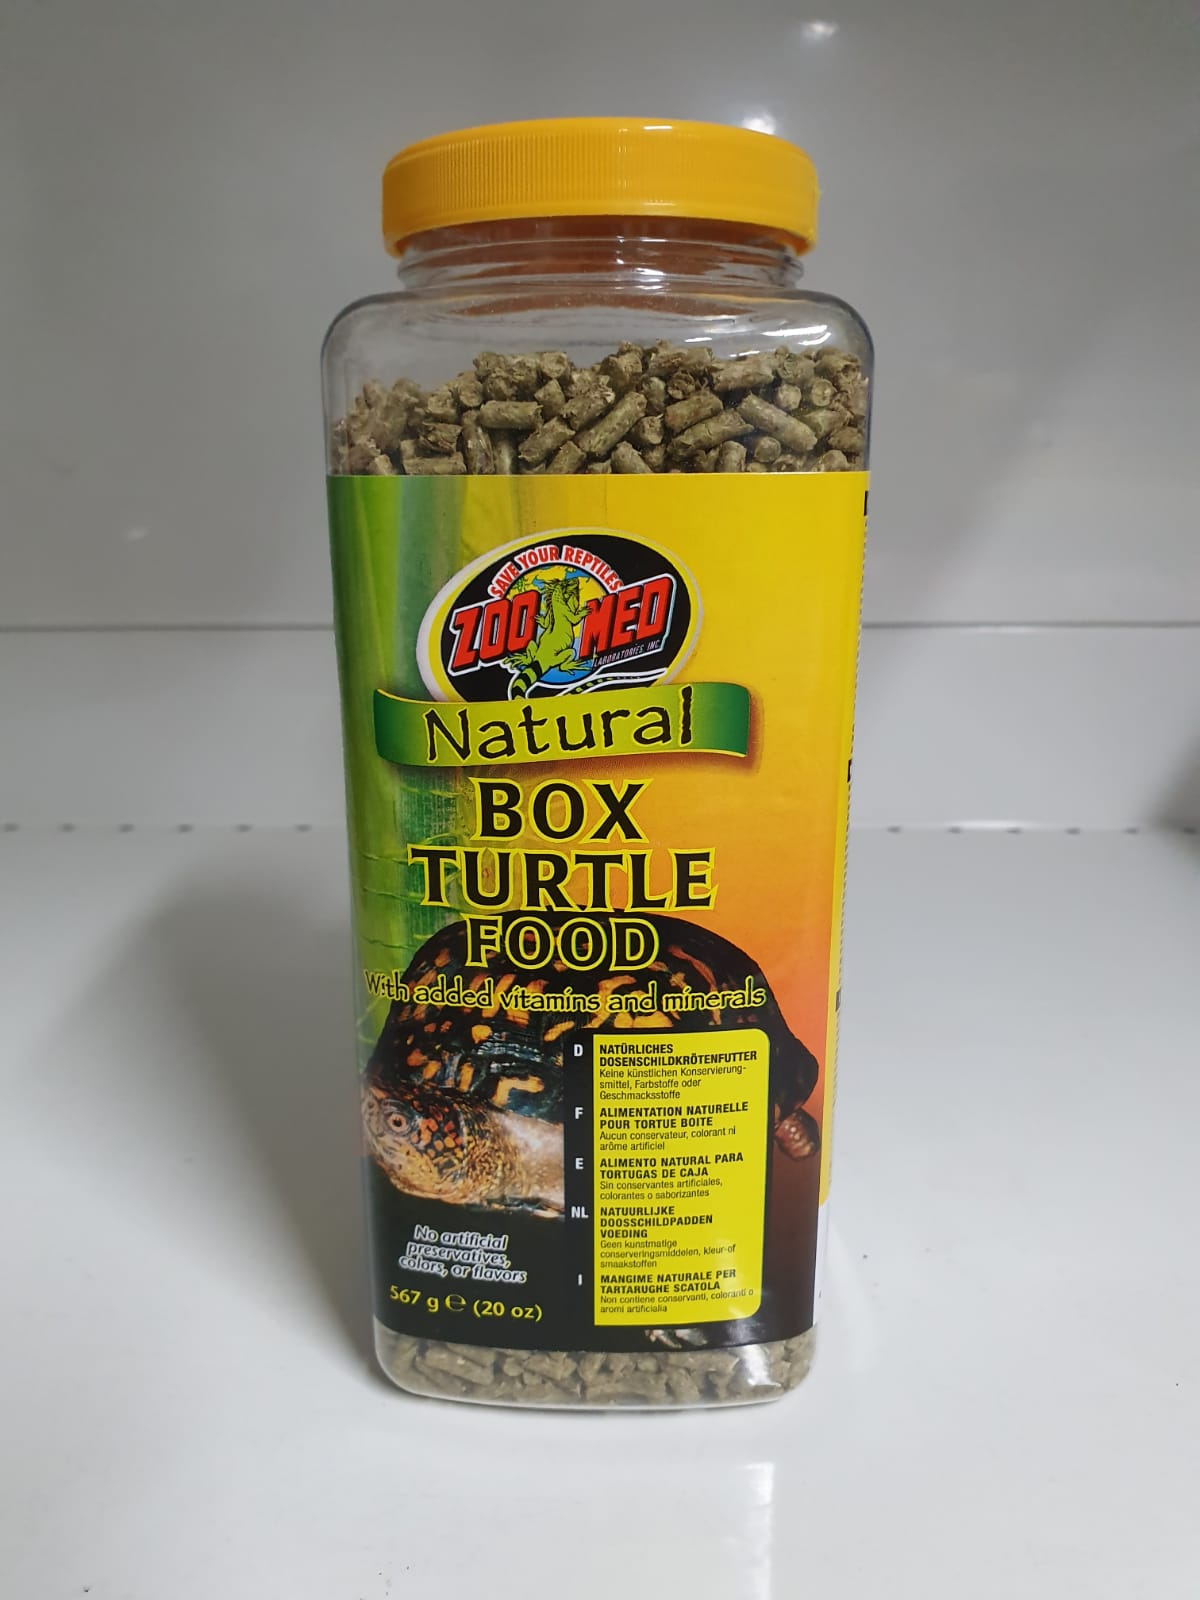 Natural box turtle food 567g